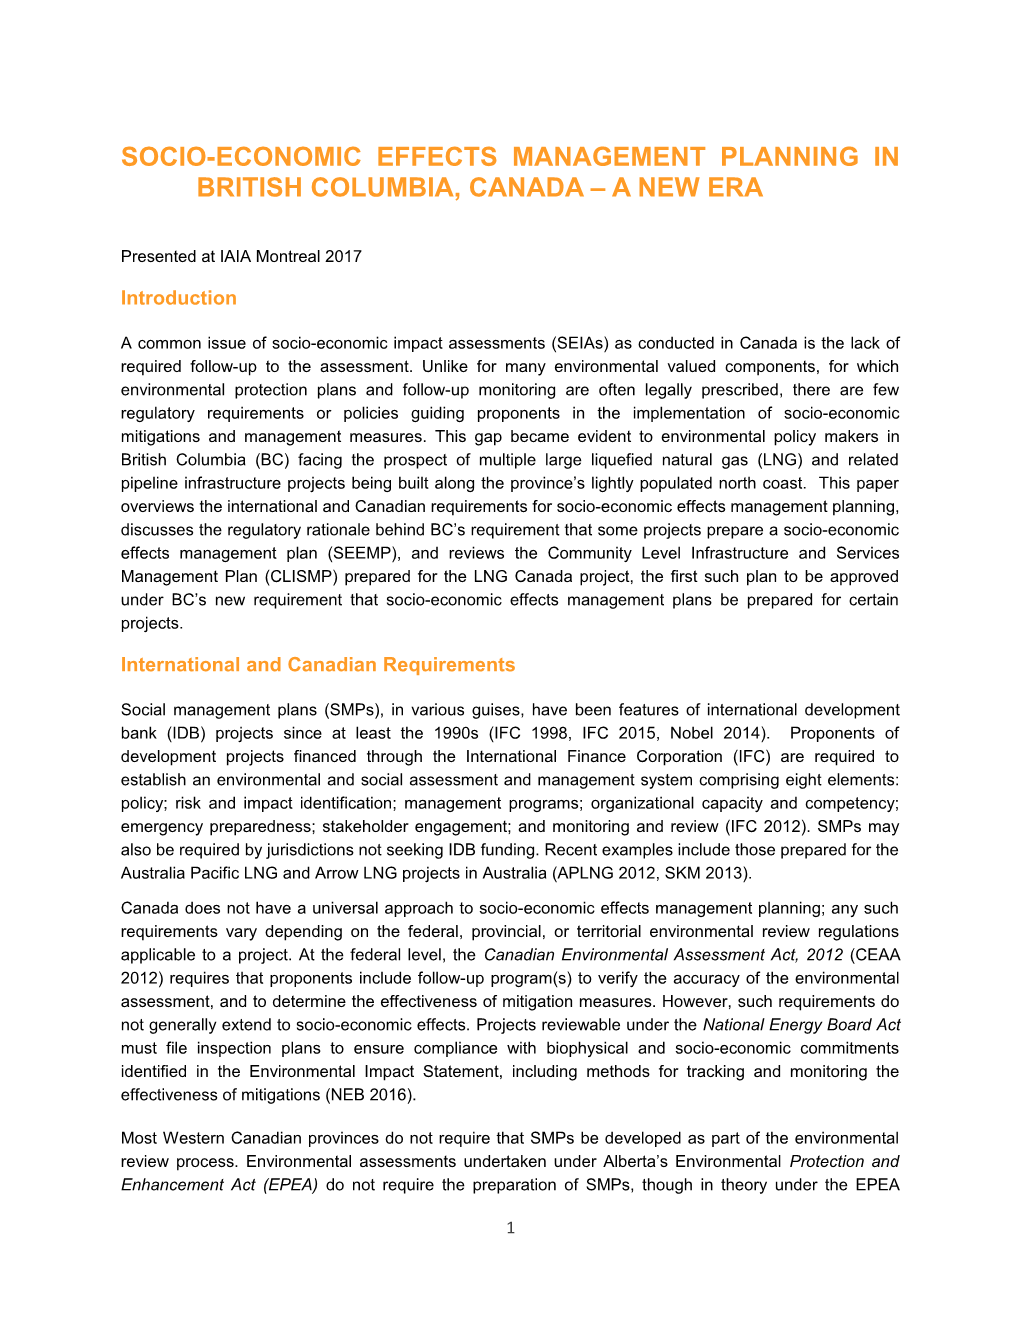 Socio-Economic Effects Management Planning in British Columbia, Canada a New Era